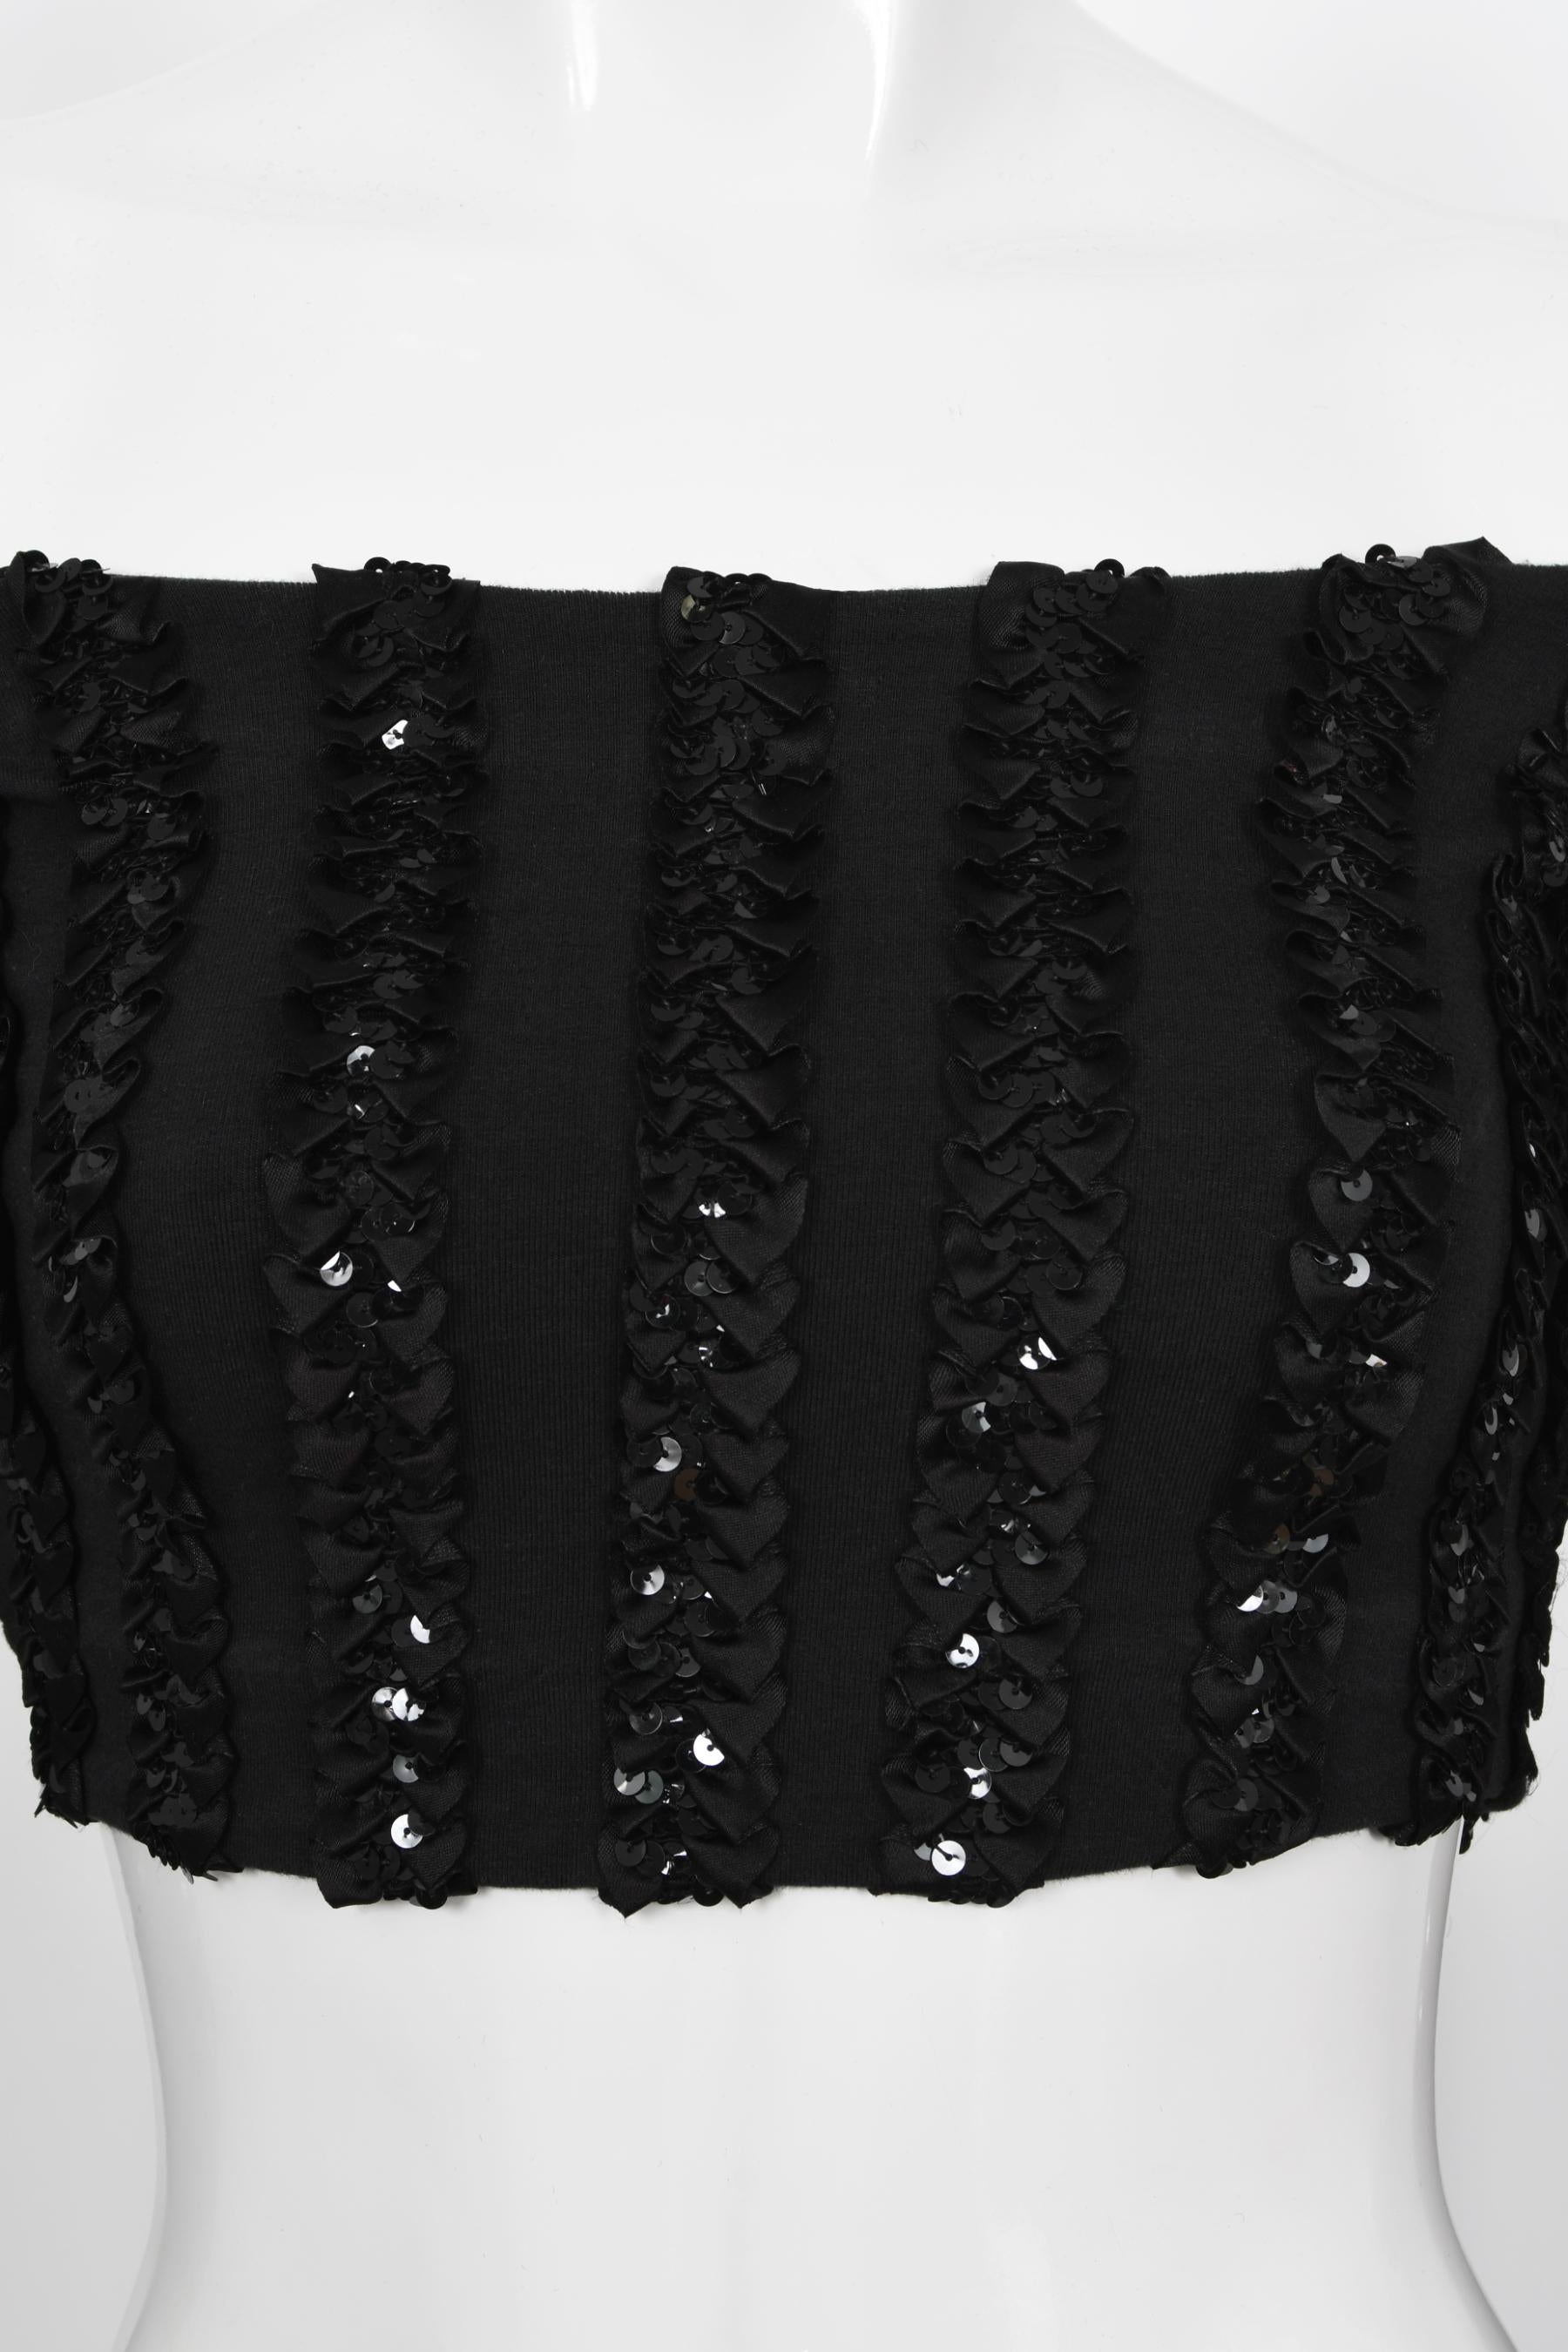 Vintage Betsey Johnson Punk Label Black Sequin Stretch Knit Crop Top & Leggings  For Sale 4